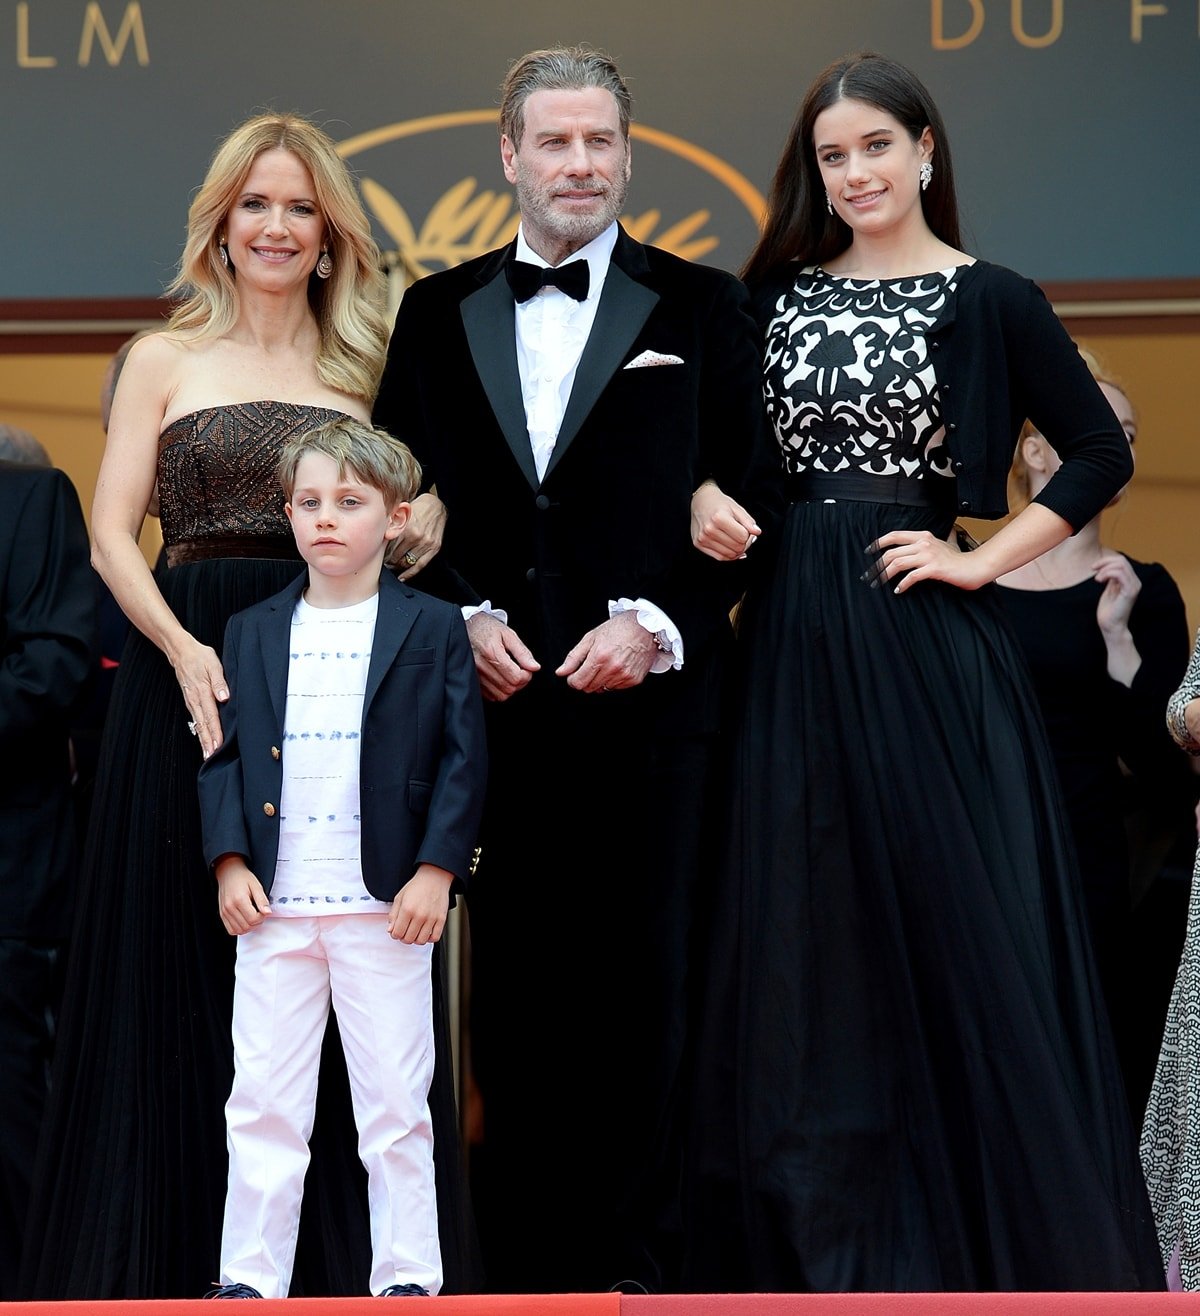 Kelly Preston (L) and John Travolta of "Gotti" pose with their children Ella Bleu Travolta (R) and Benjamin Travolta at the red carpet screening of "Solo: A Star Wars Story"